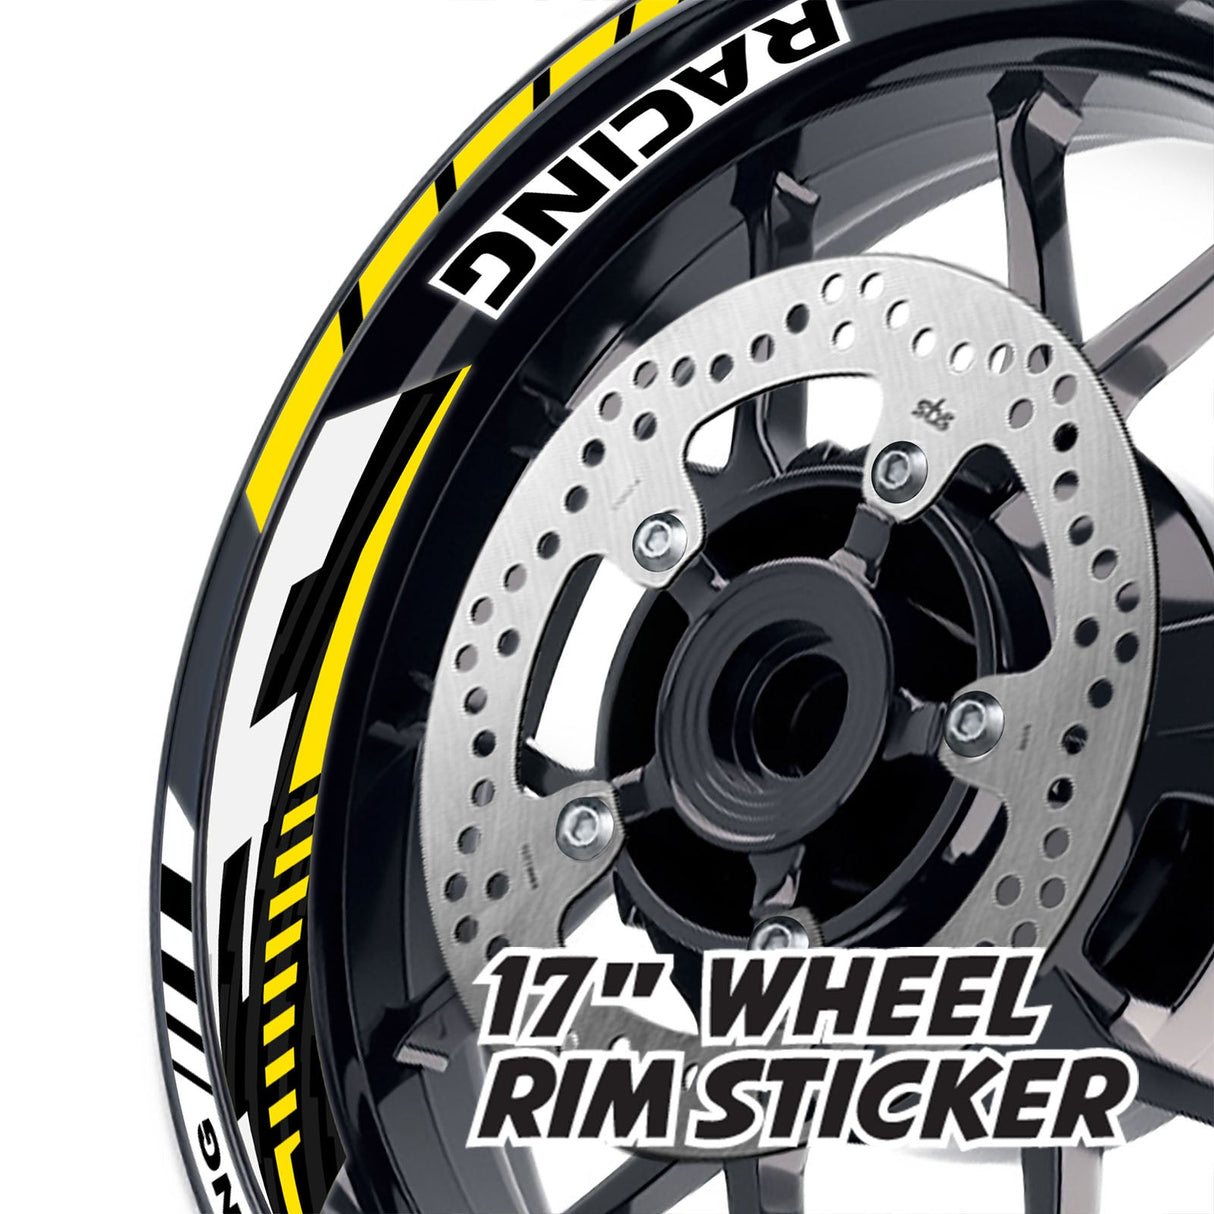 StickerBao Yellow 17 inch GP09 Platinum Inner Edge Rim Sticker Universal Motorcycle Rim Wheel Decal Racing For Suzuki